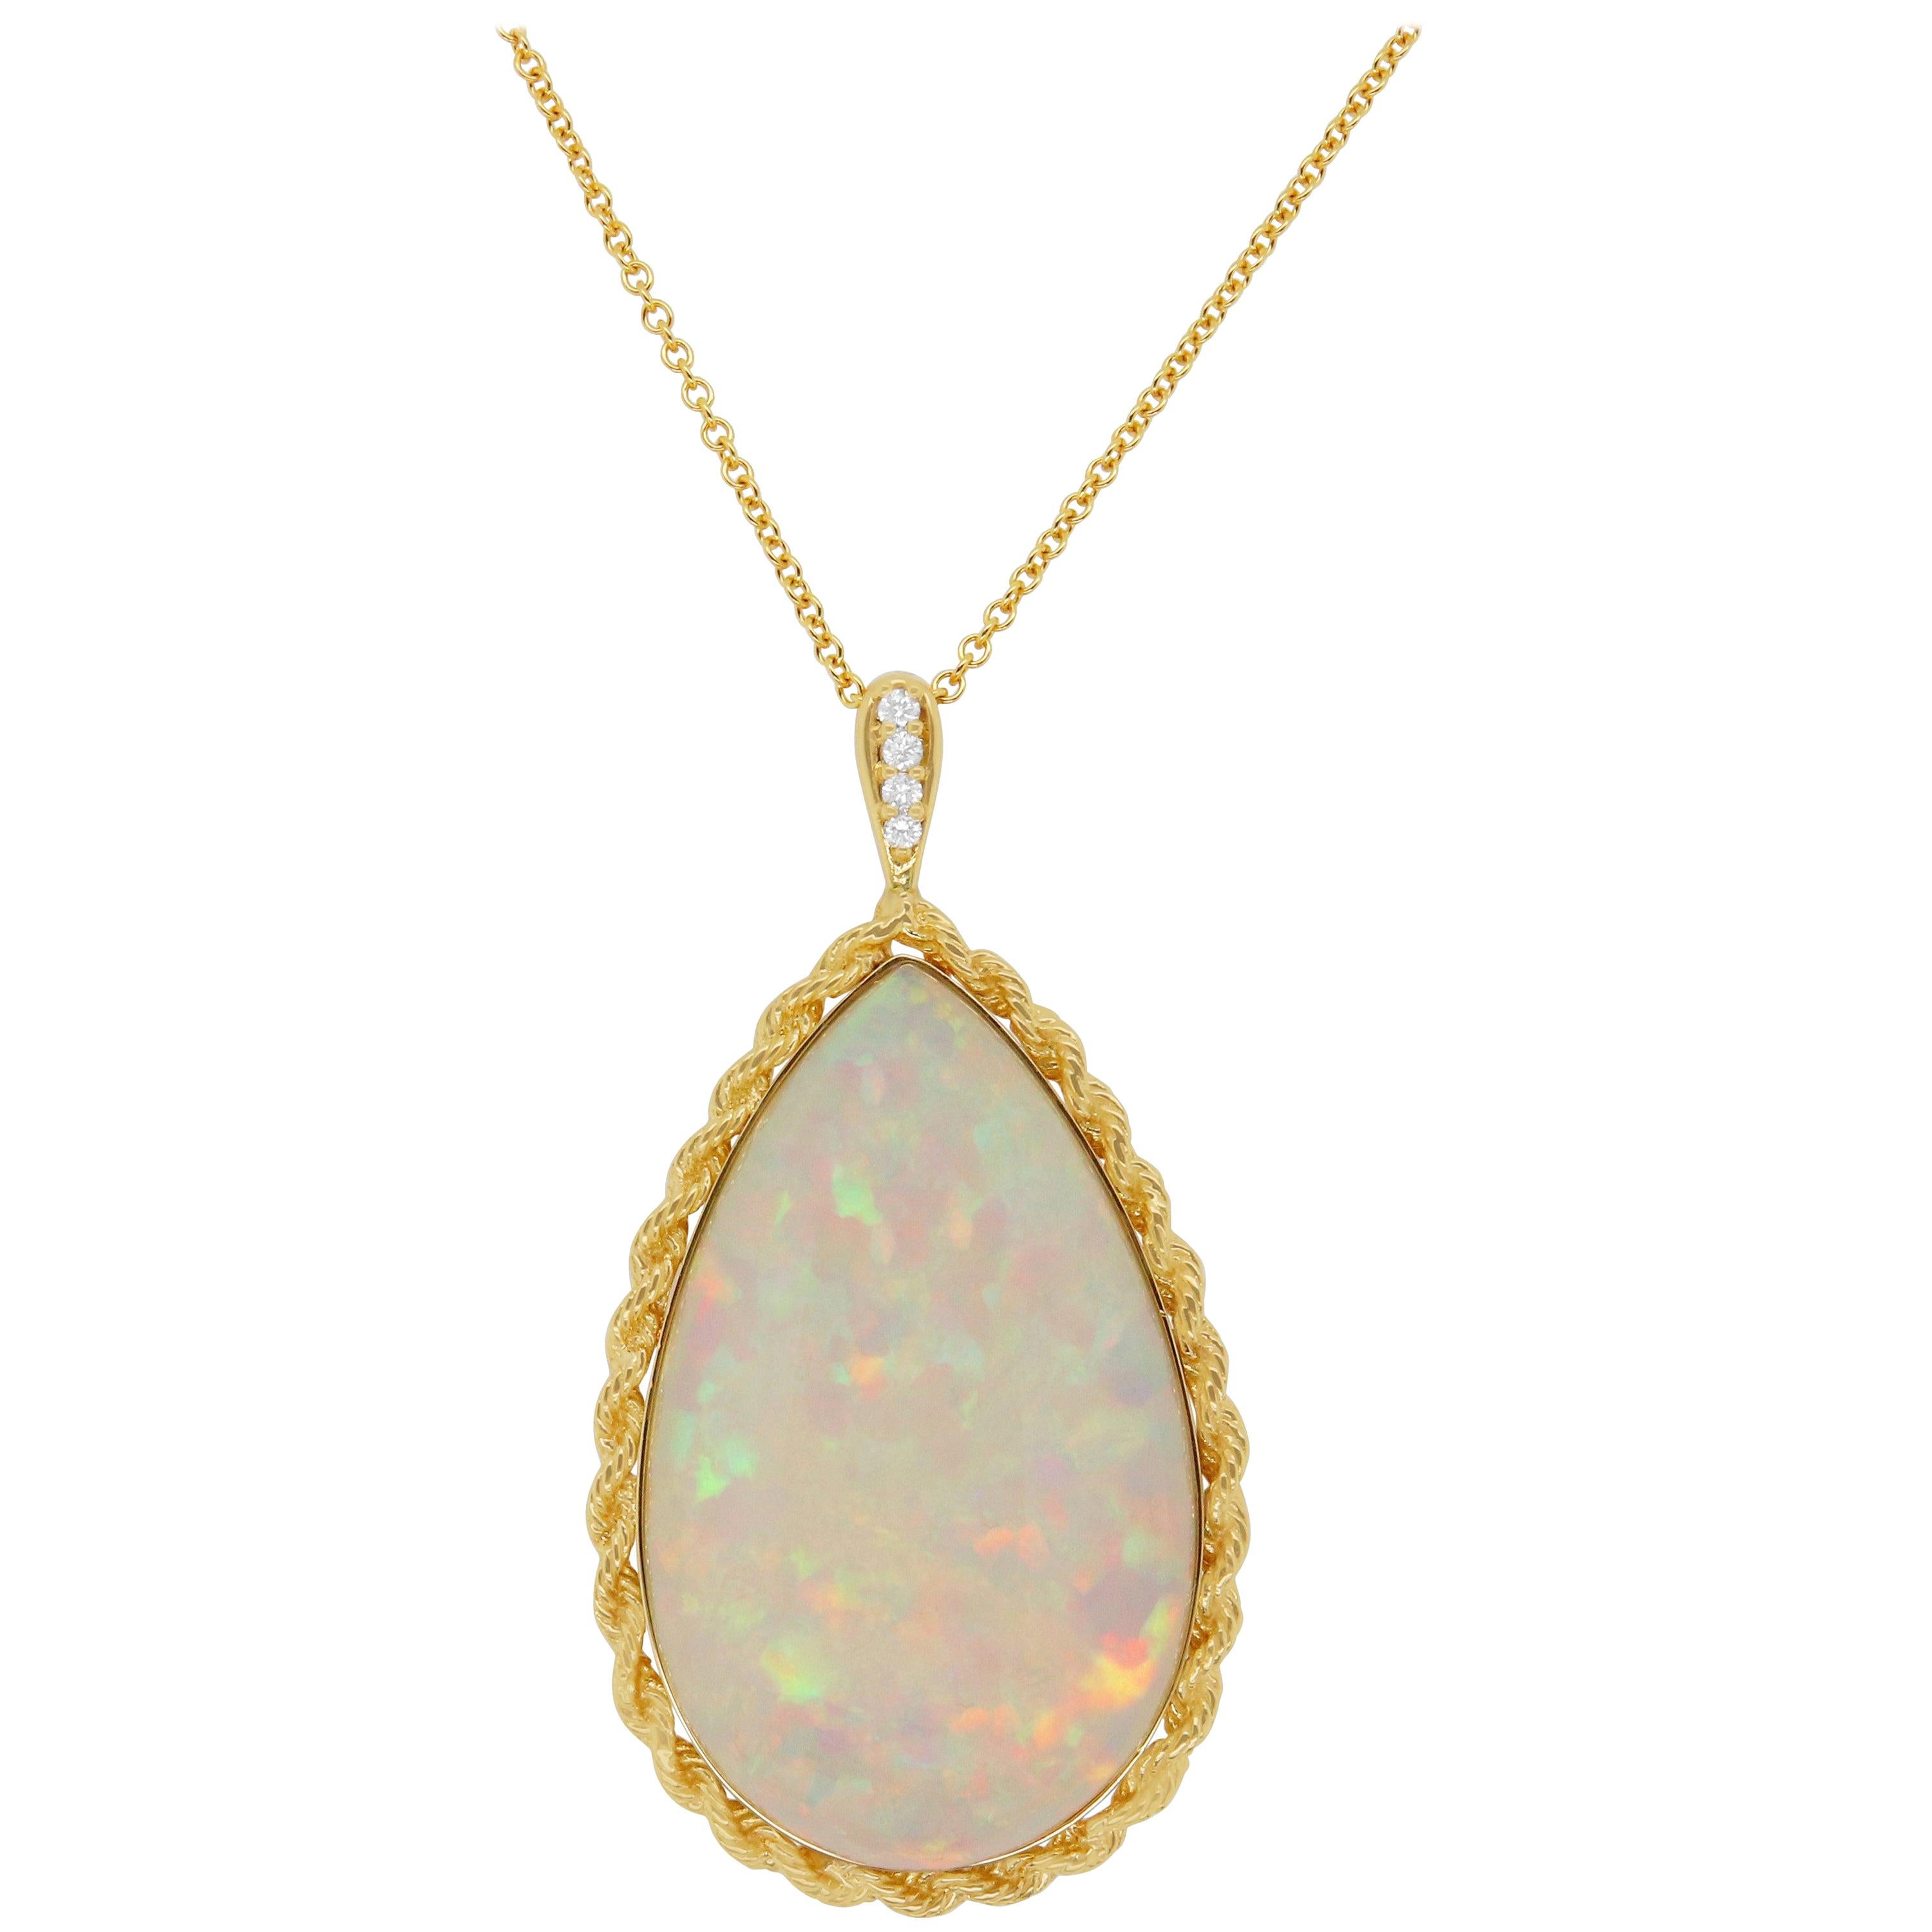 50.80 Carat Pear Shaped Opal and Diamond Pendant